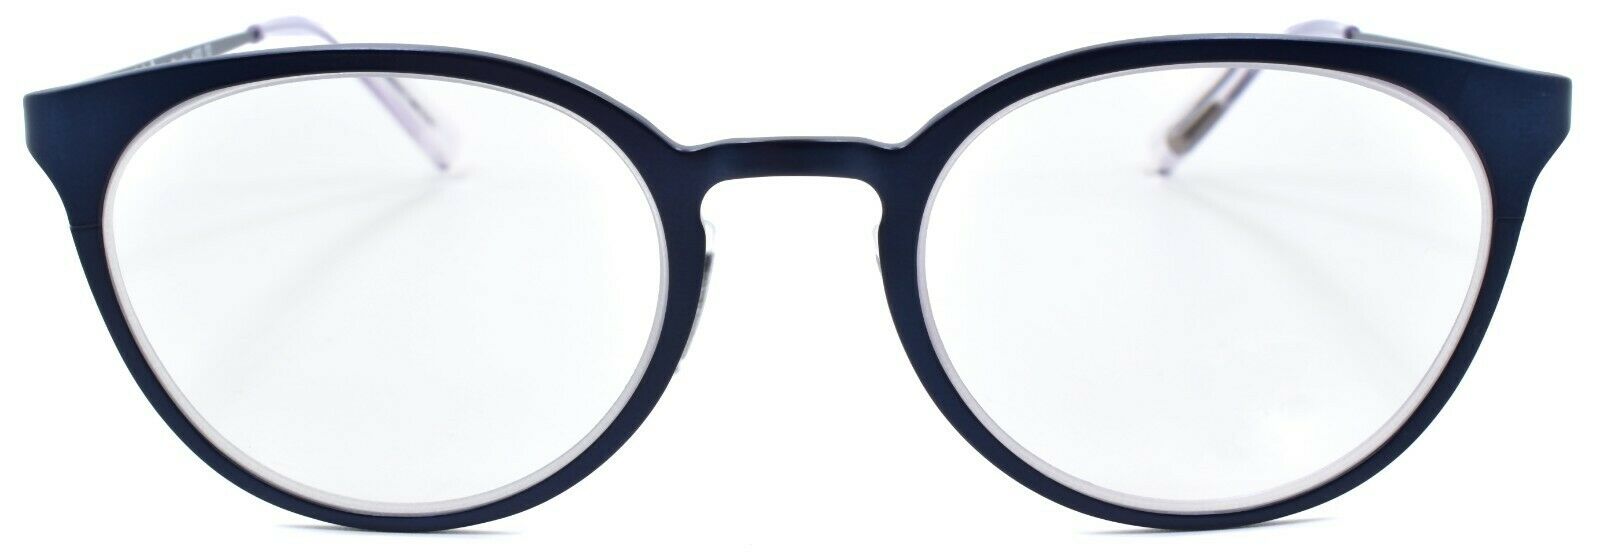 2-Eyebobs Jim Dandy 600 10 Reading Glasses Navy Blue +1.75-842754137829-IKSpecs